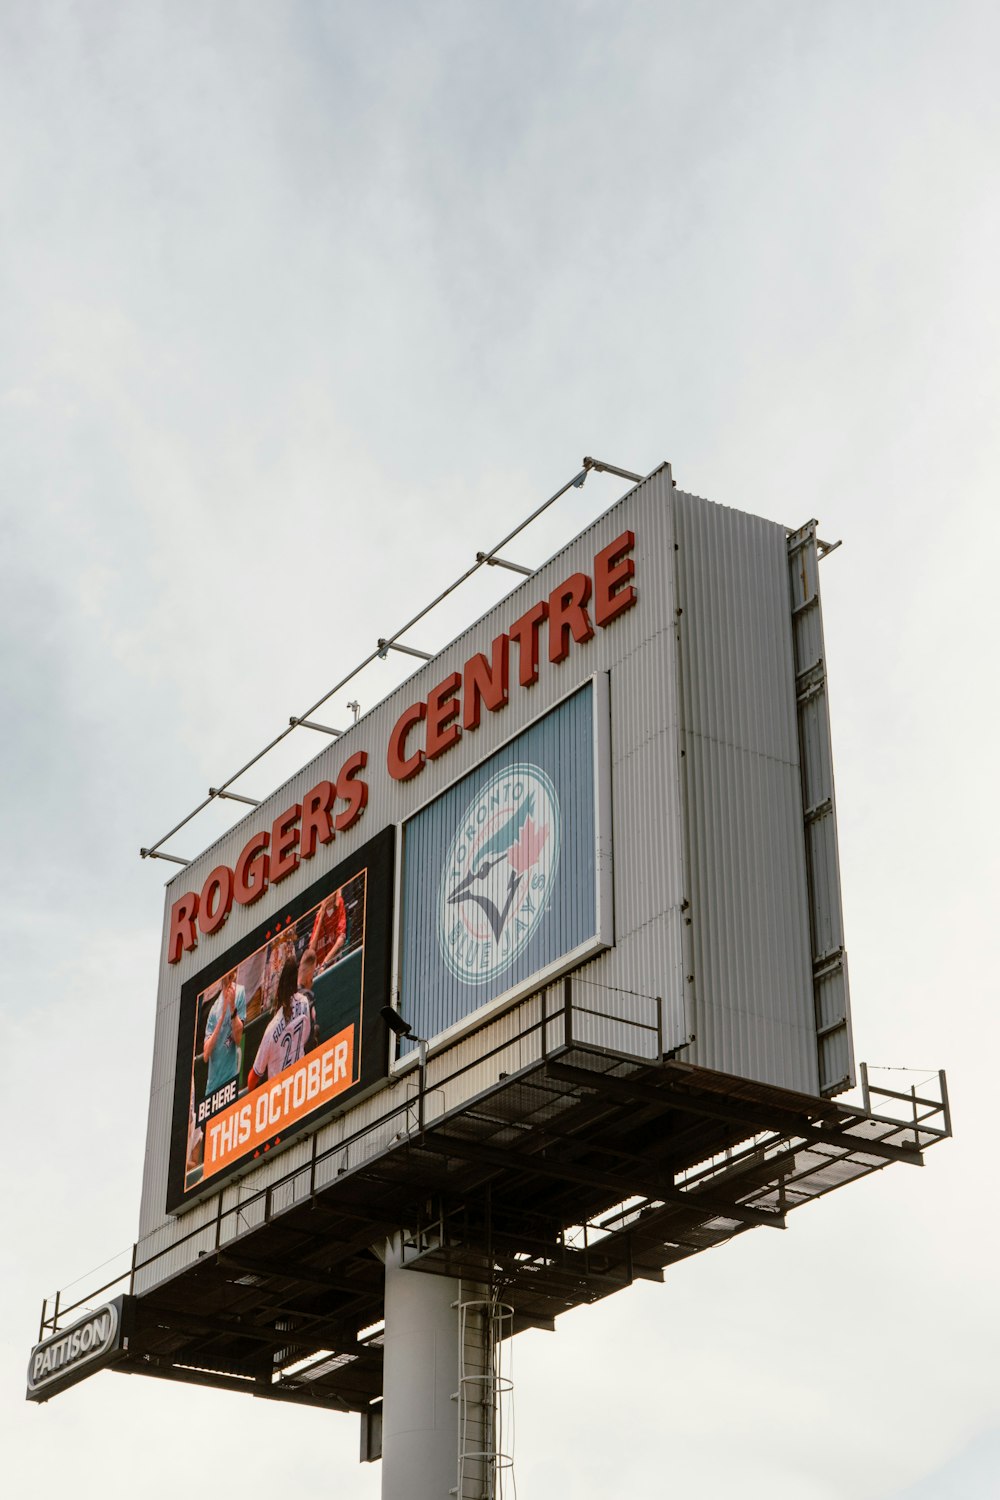 a billboard on a building